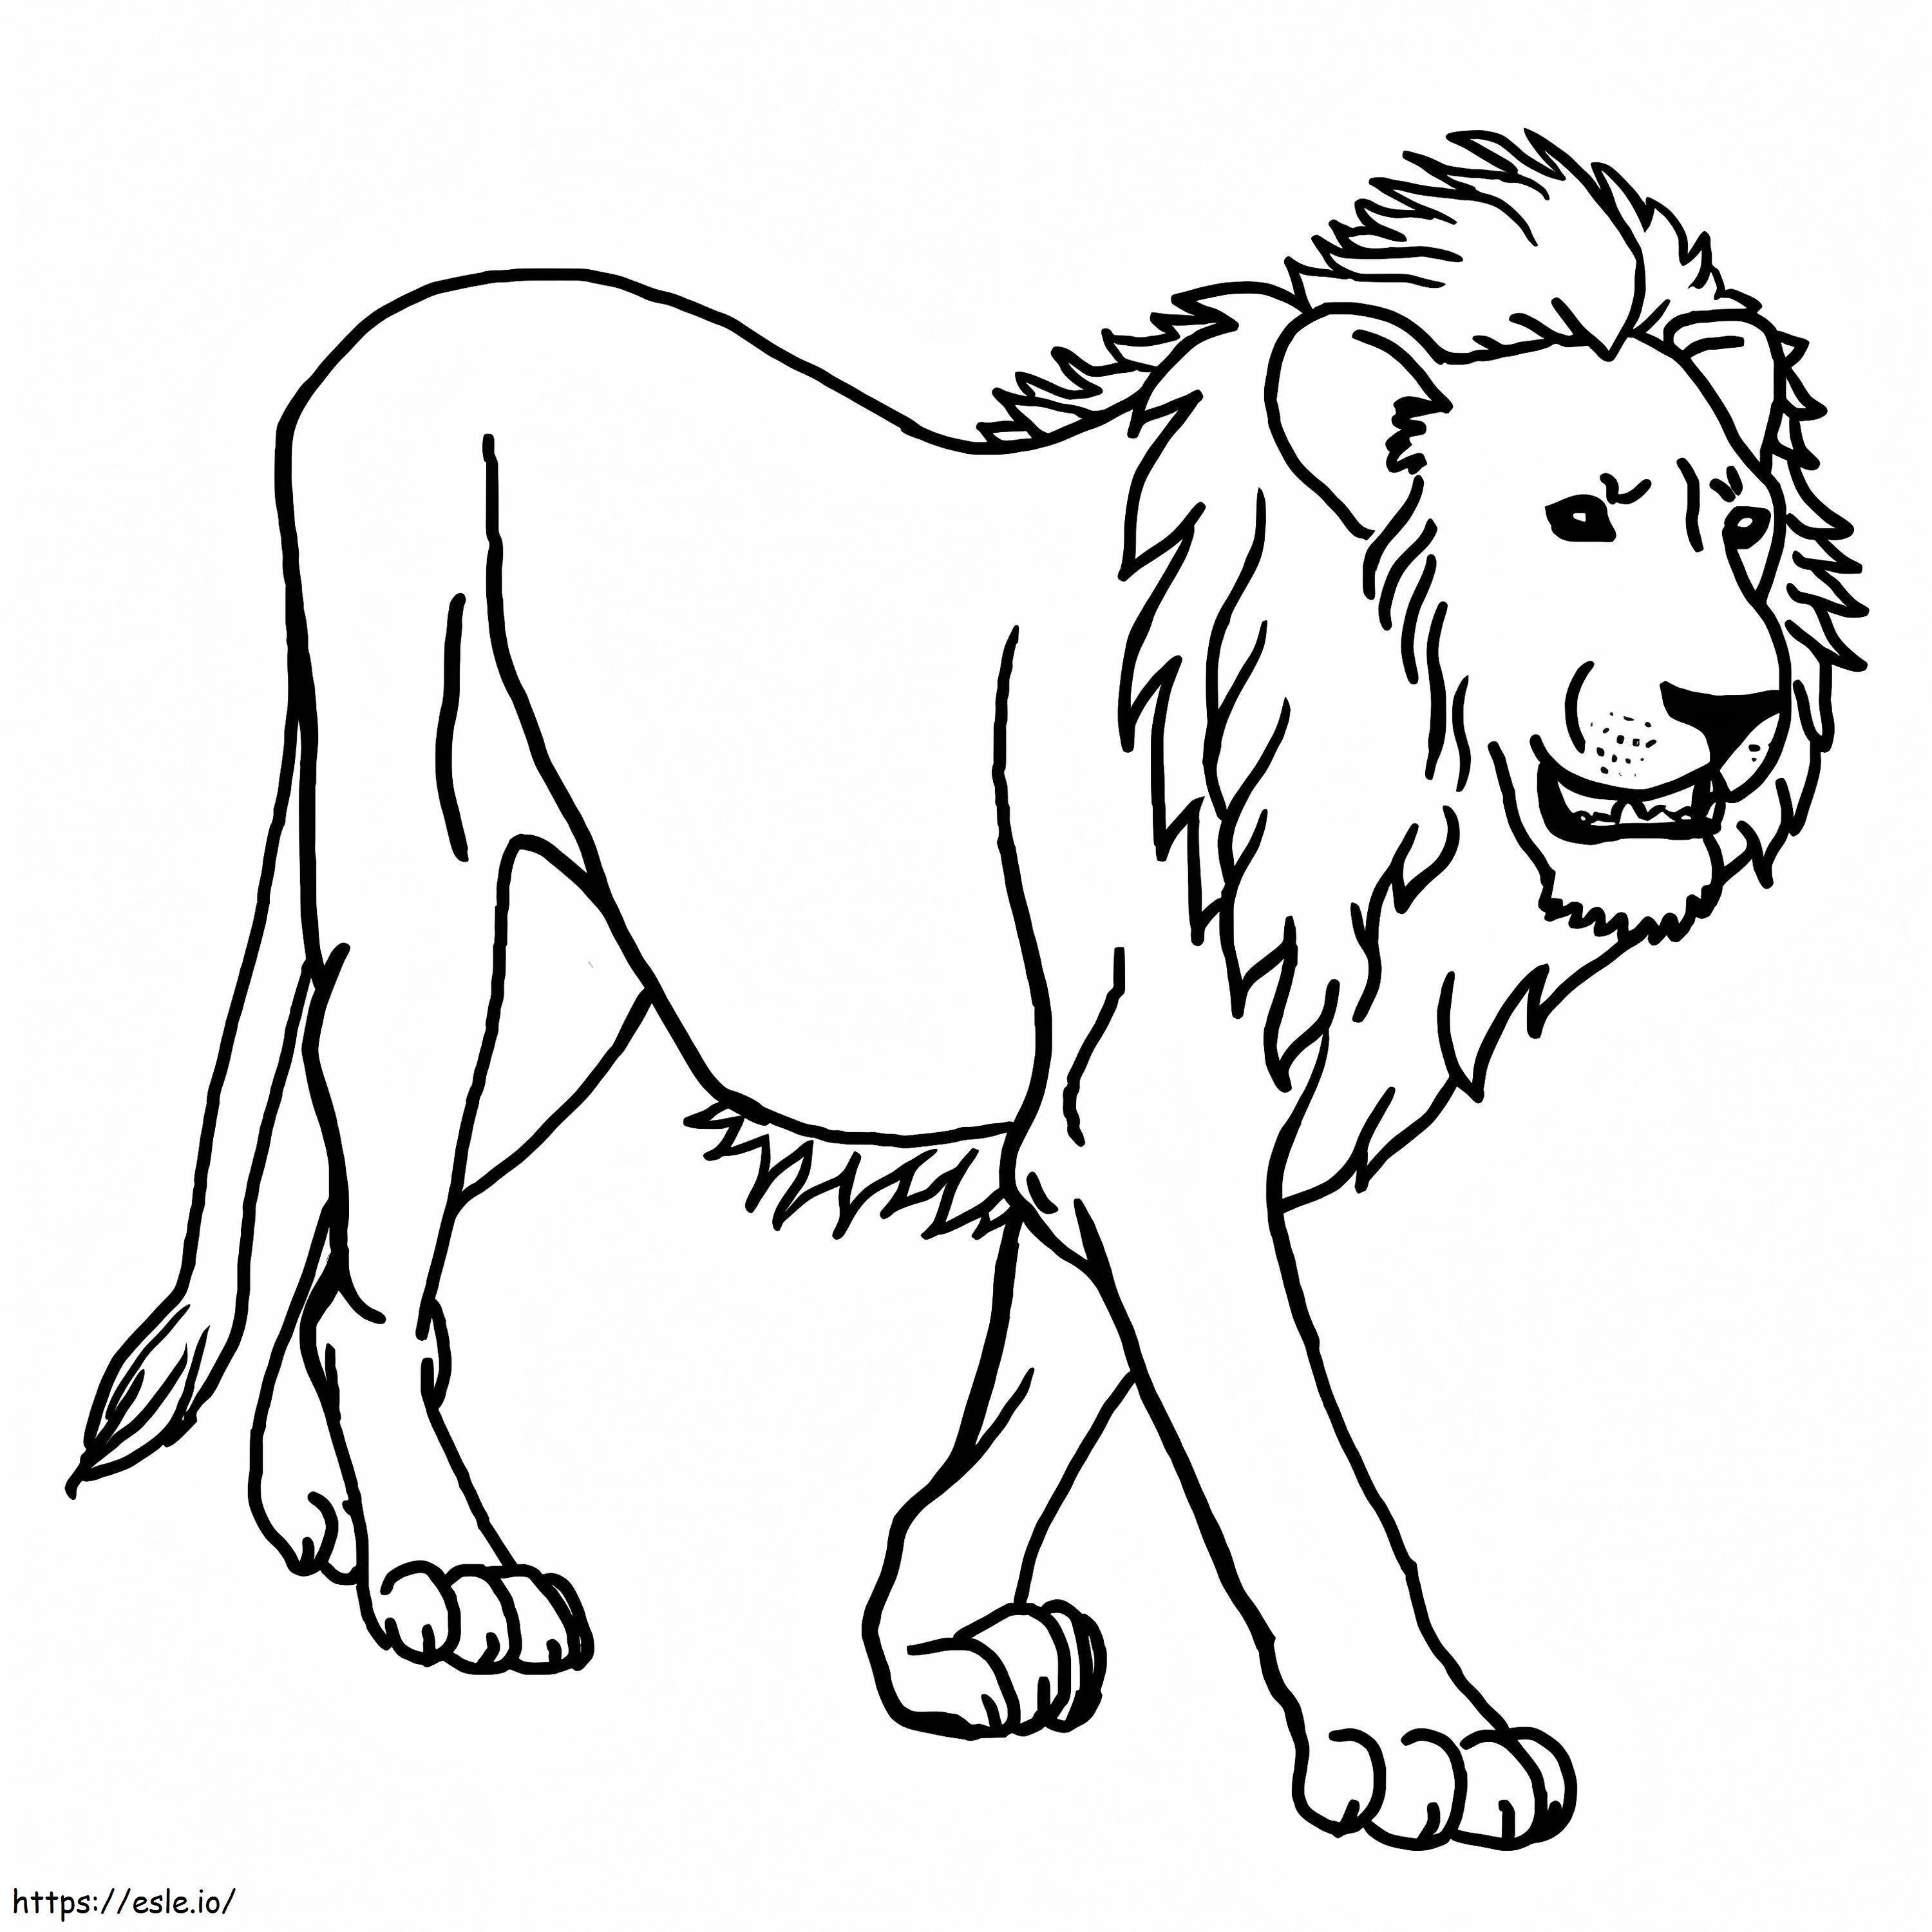 Walking Lion coloring page